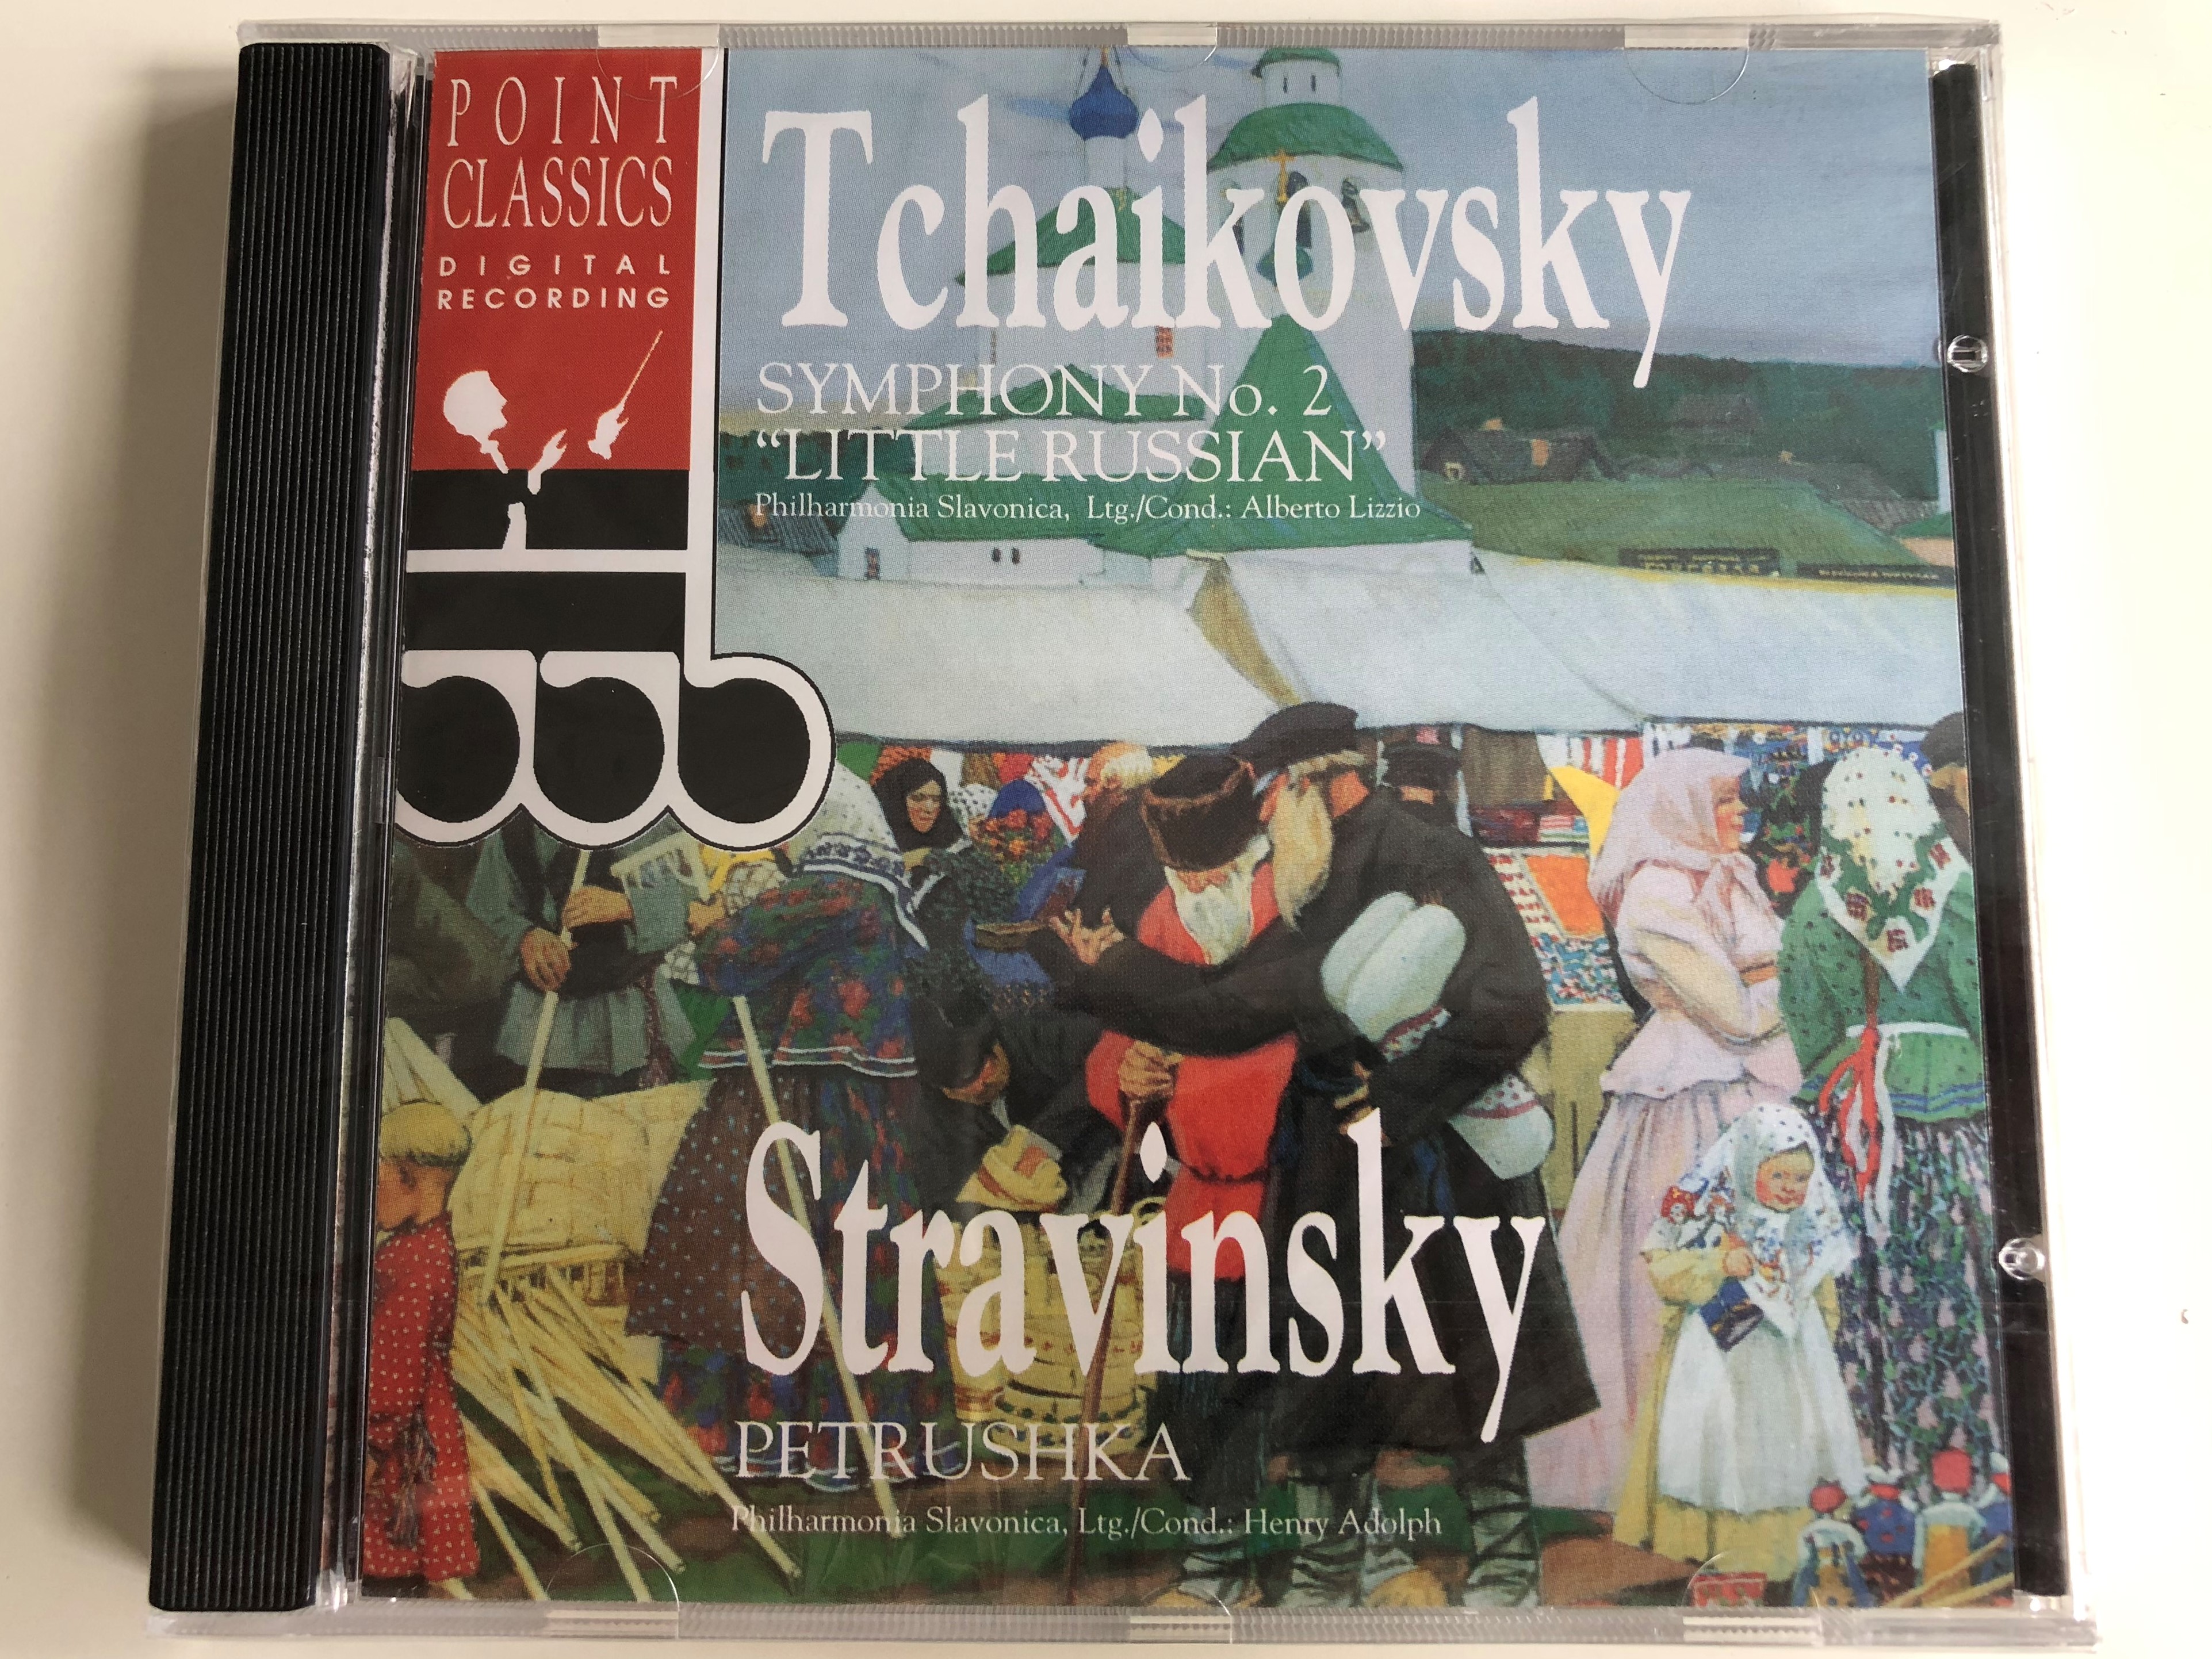 tchaikovsky-symphony-no.-2-little-russian-stravinsky-petrushka-philharmonia-slavonica-cond.-alberto-lizzio-point-classics-audio-cd-1997-2672412-1-.jpg